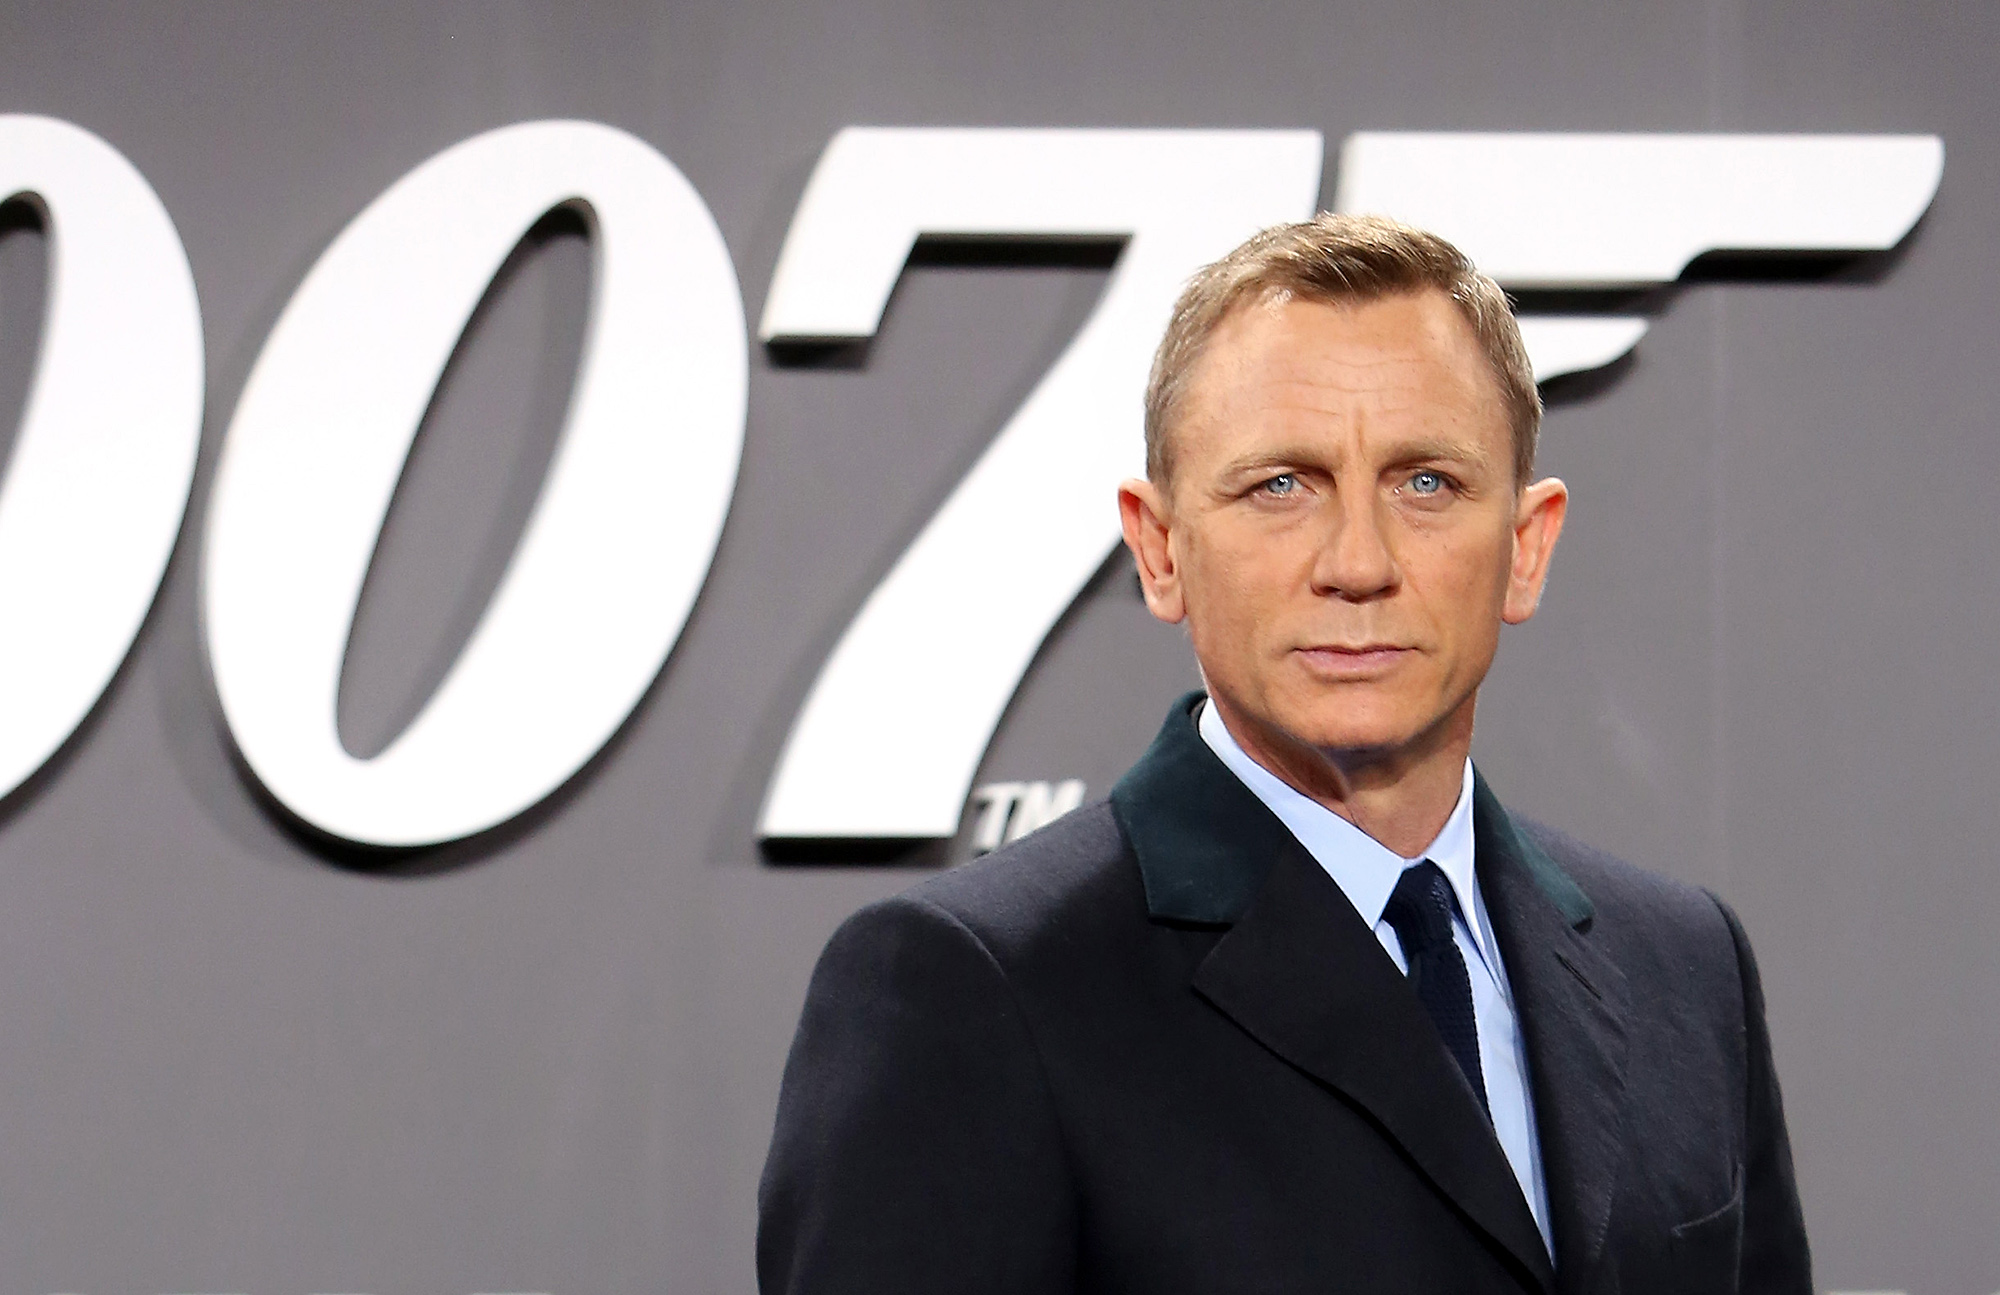 James Bond 25: Rami Malek to Play Villain, Daniel Craig Returns - Bloomberg